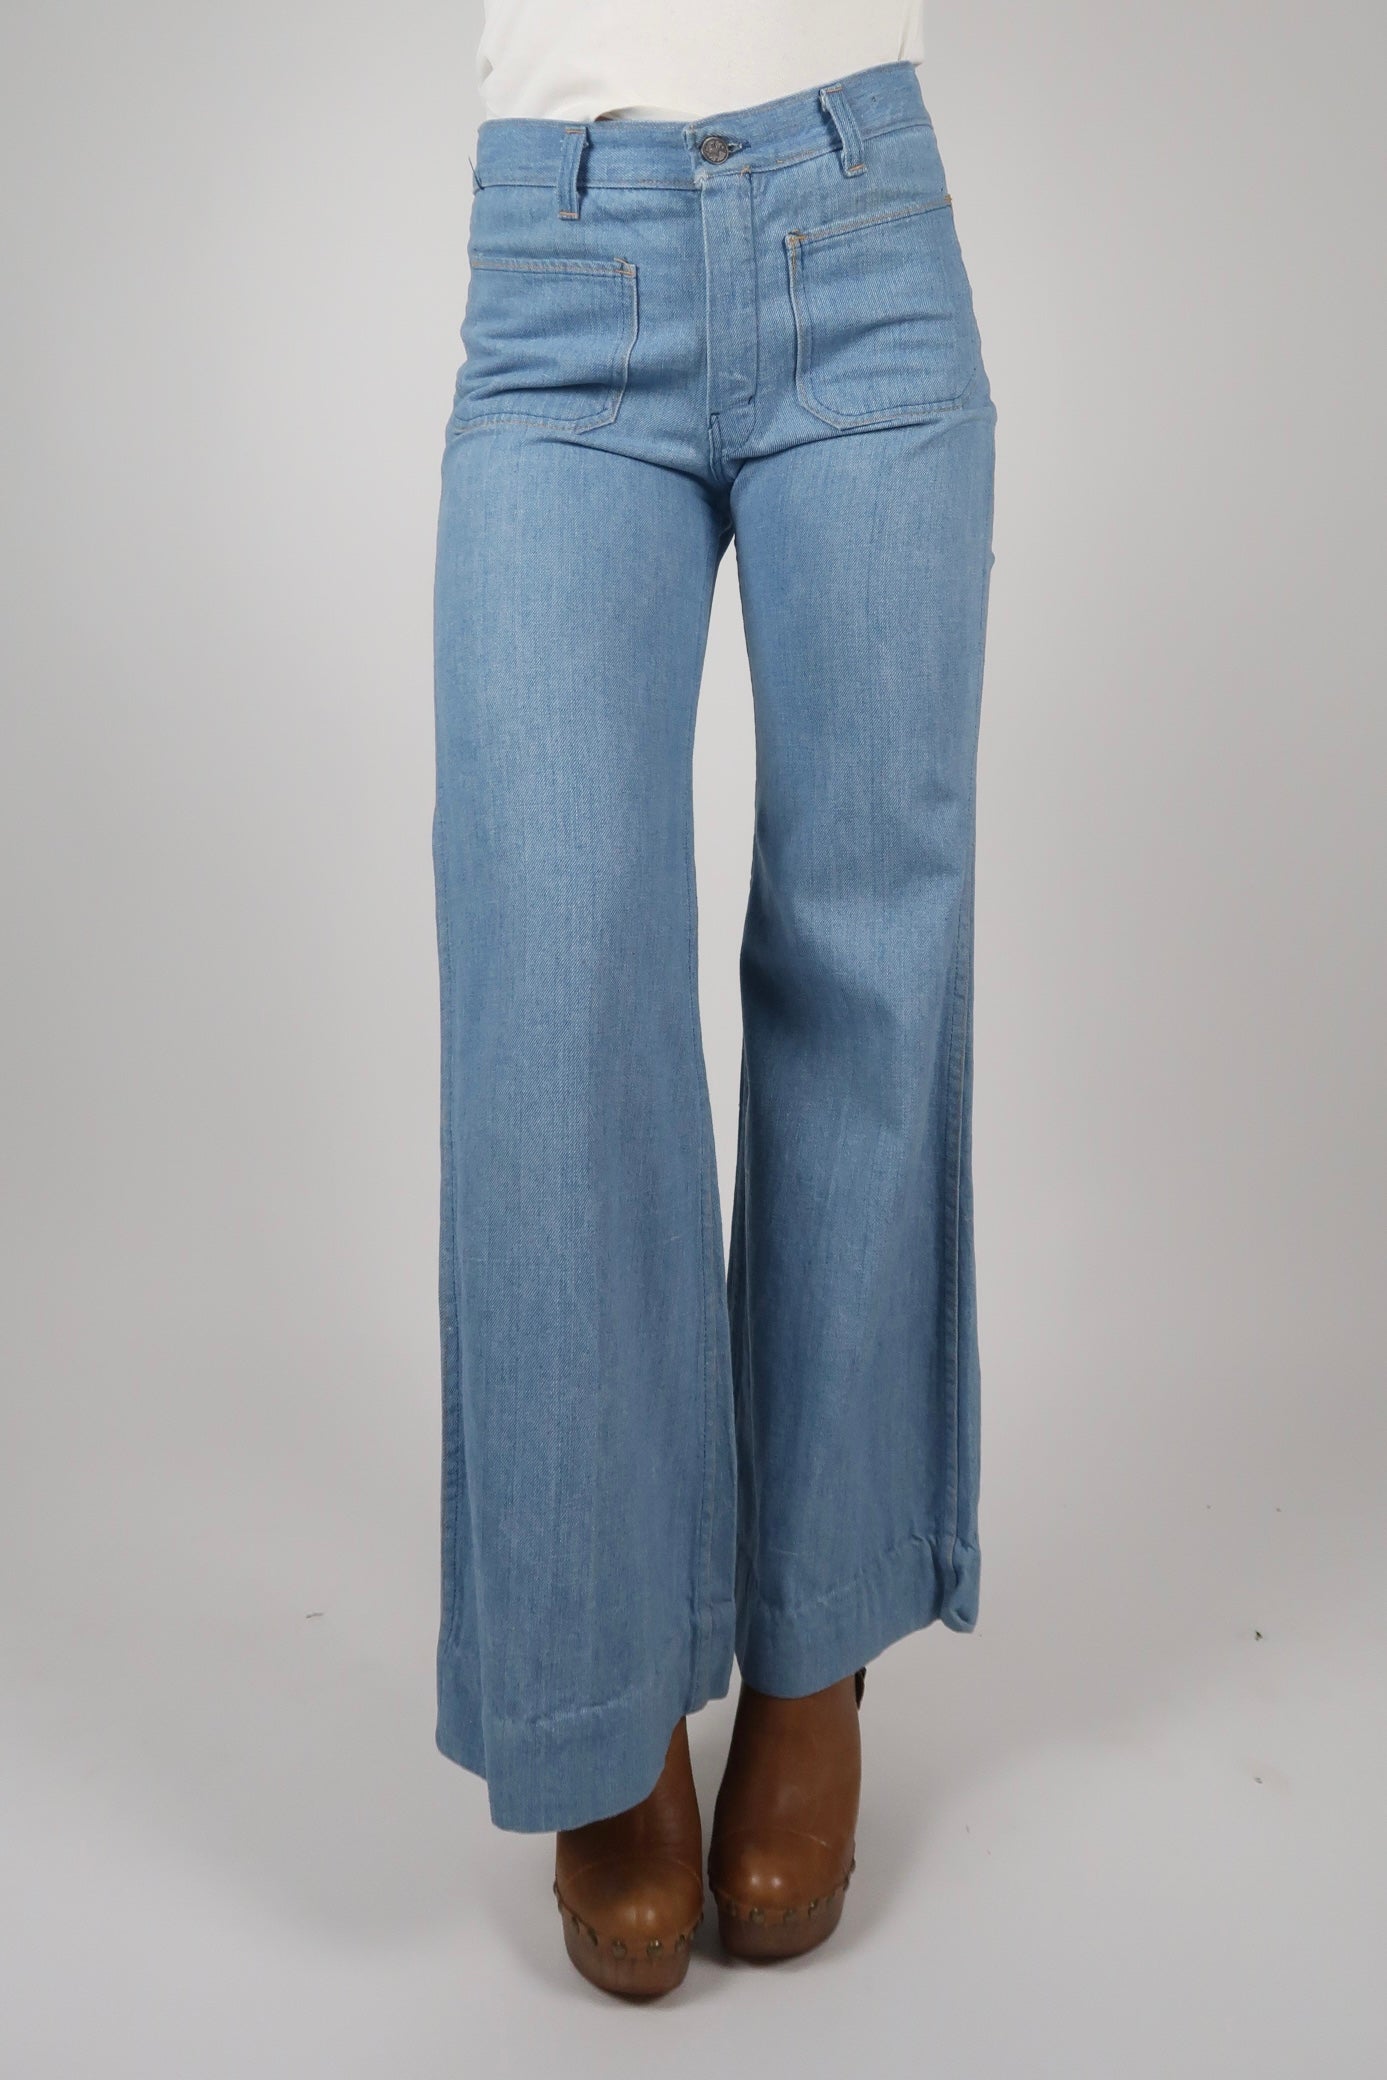 1970s light wash denim flare jeans